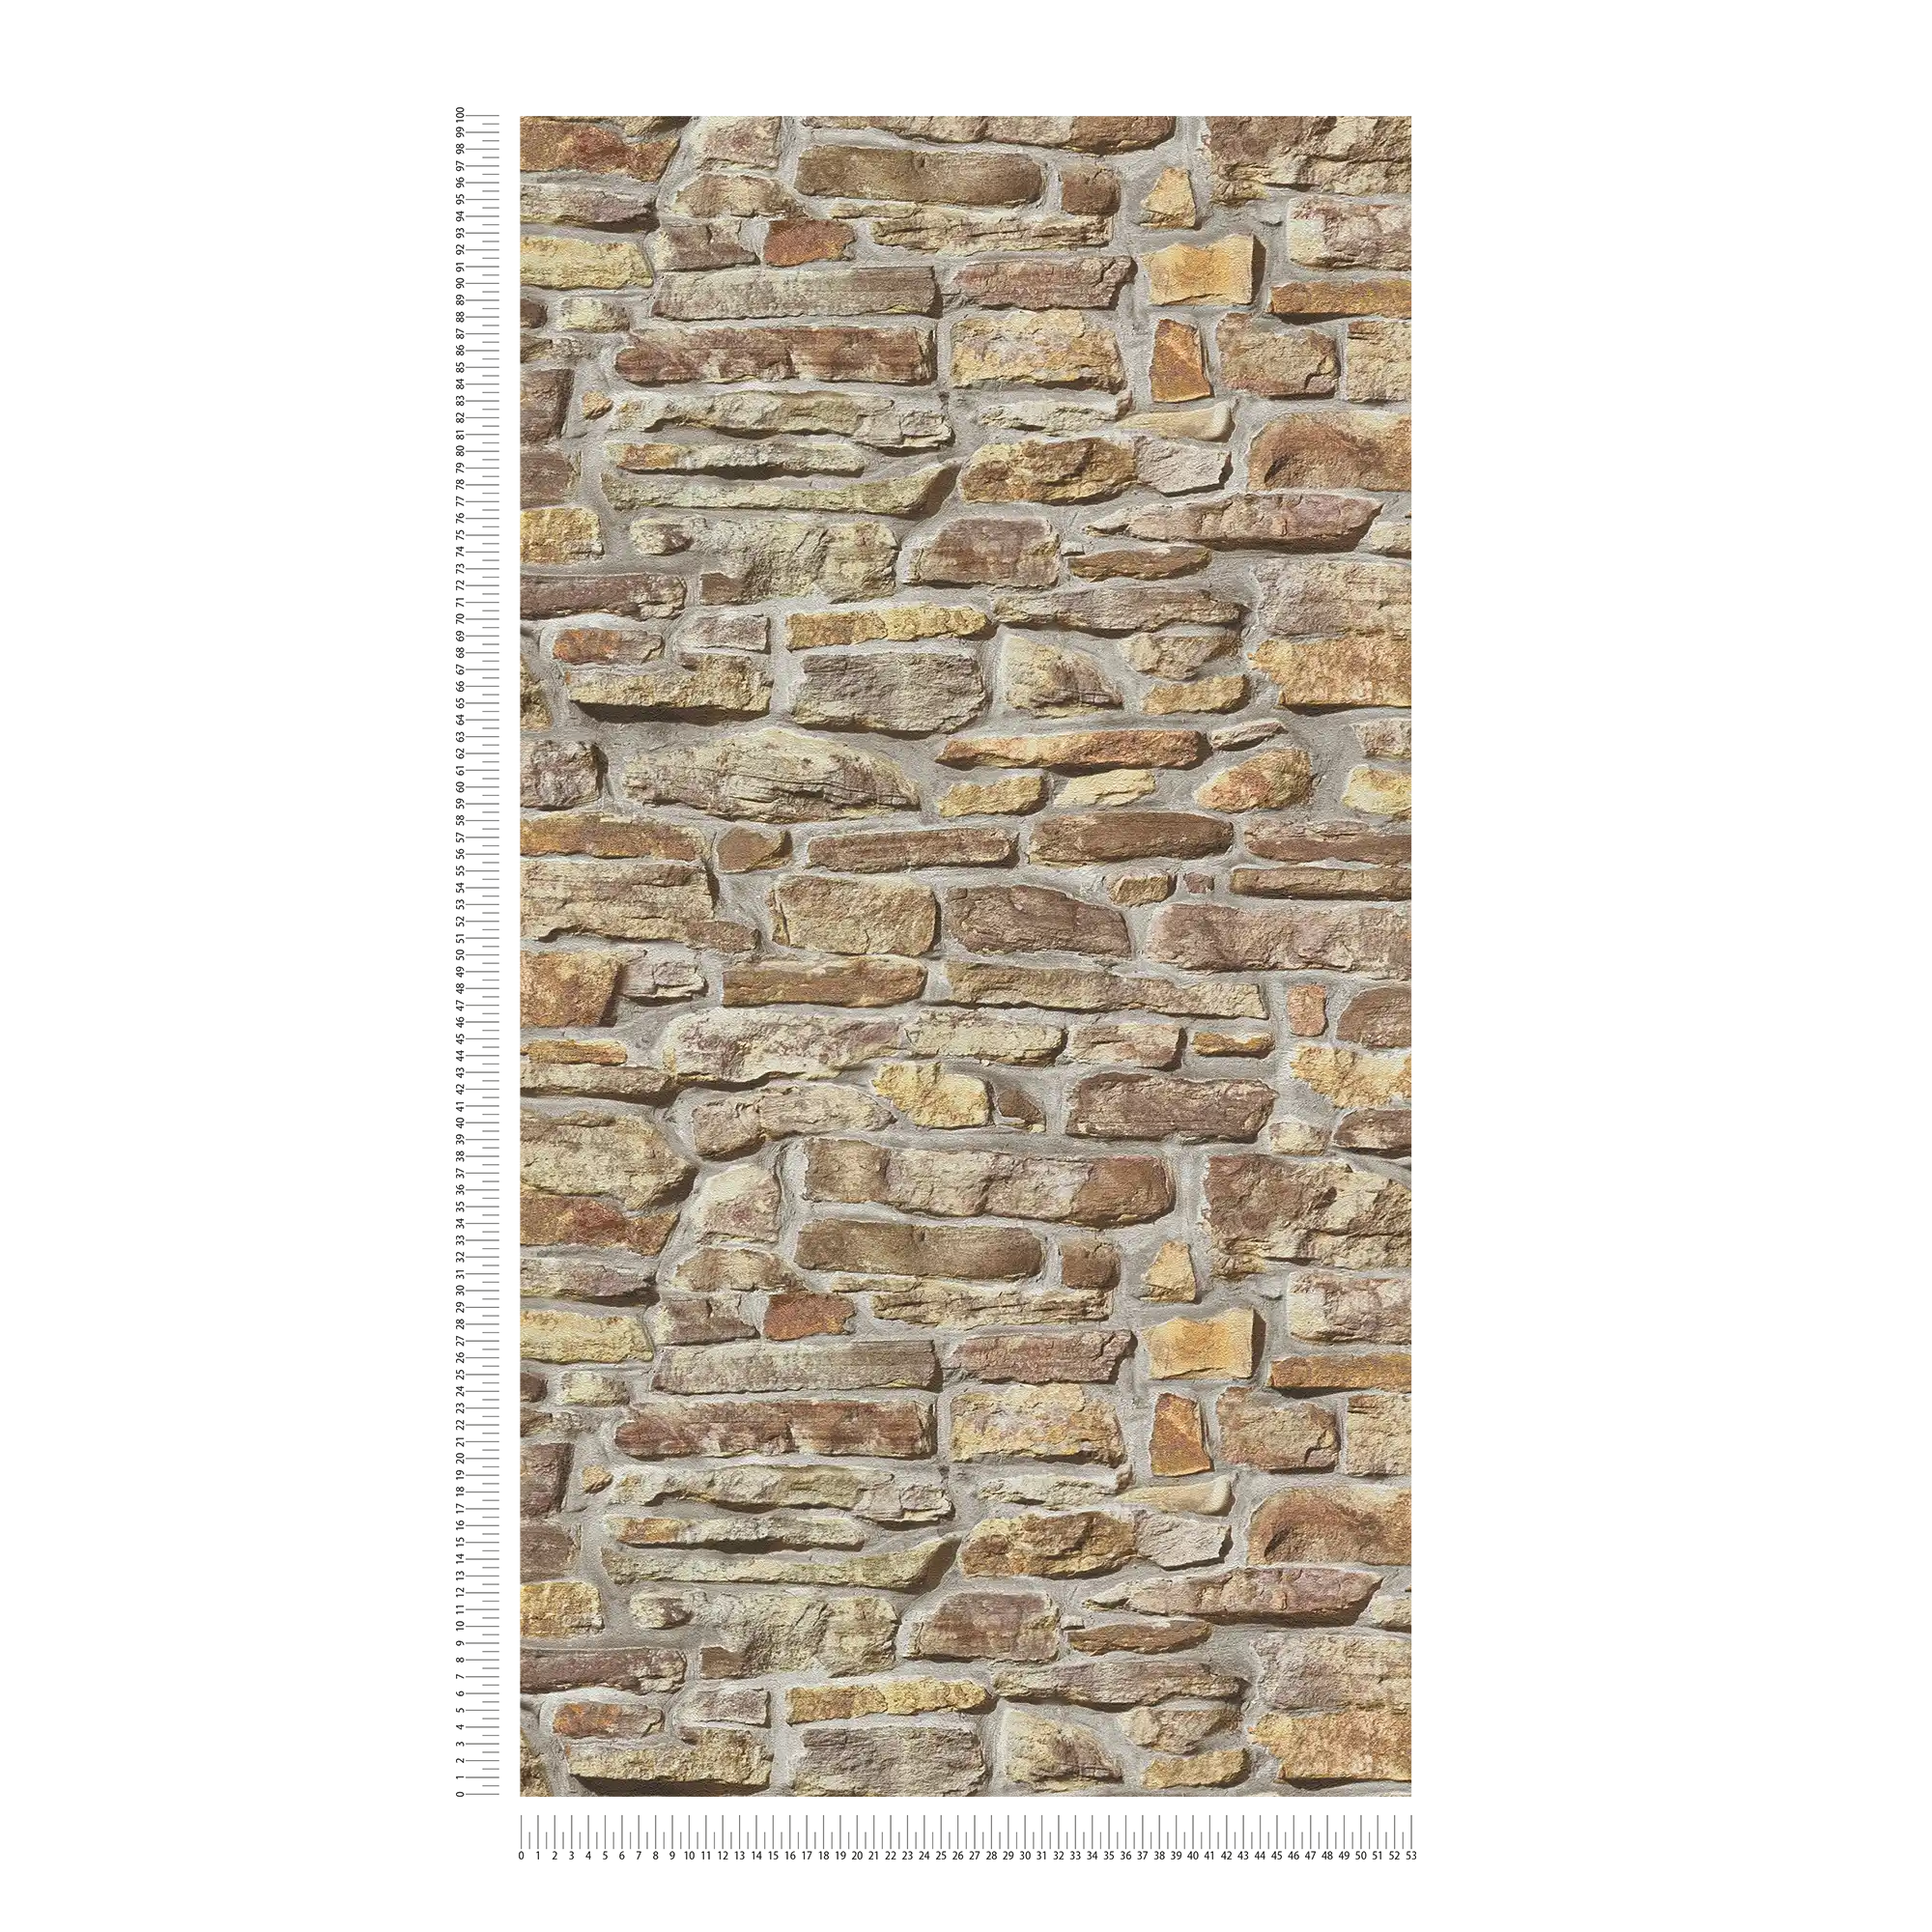             Non-woven wallpaper natural stone wall optics - beige, yellow, brown
        